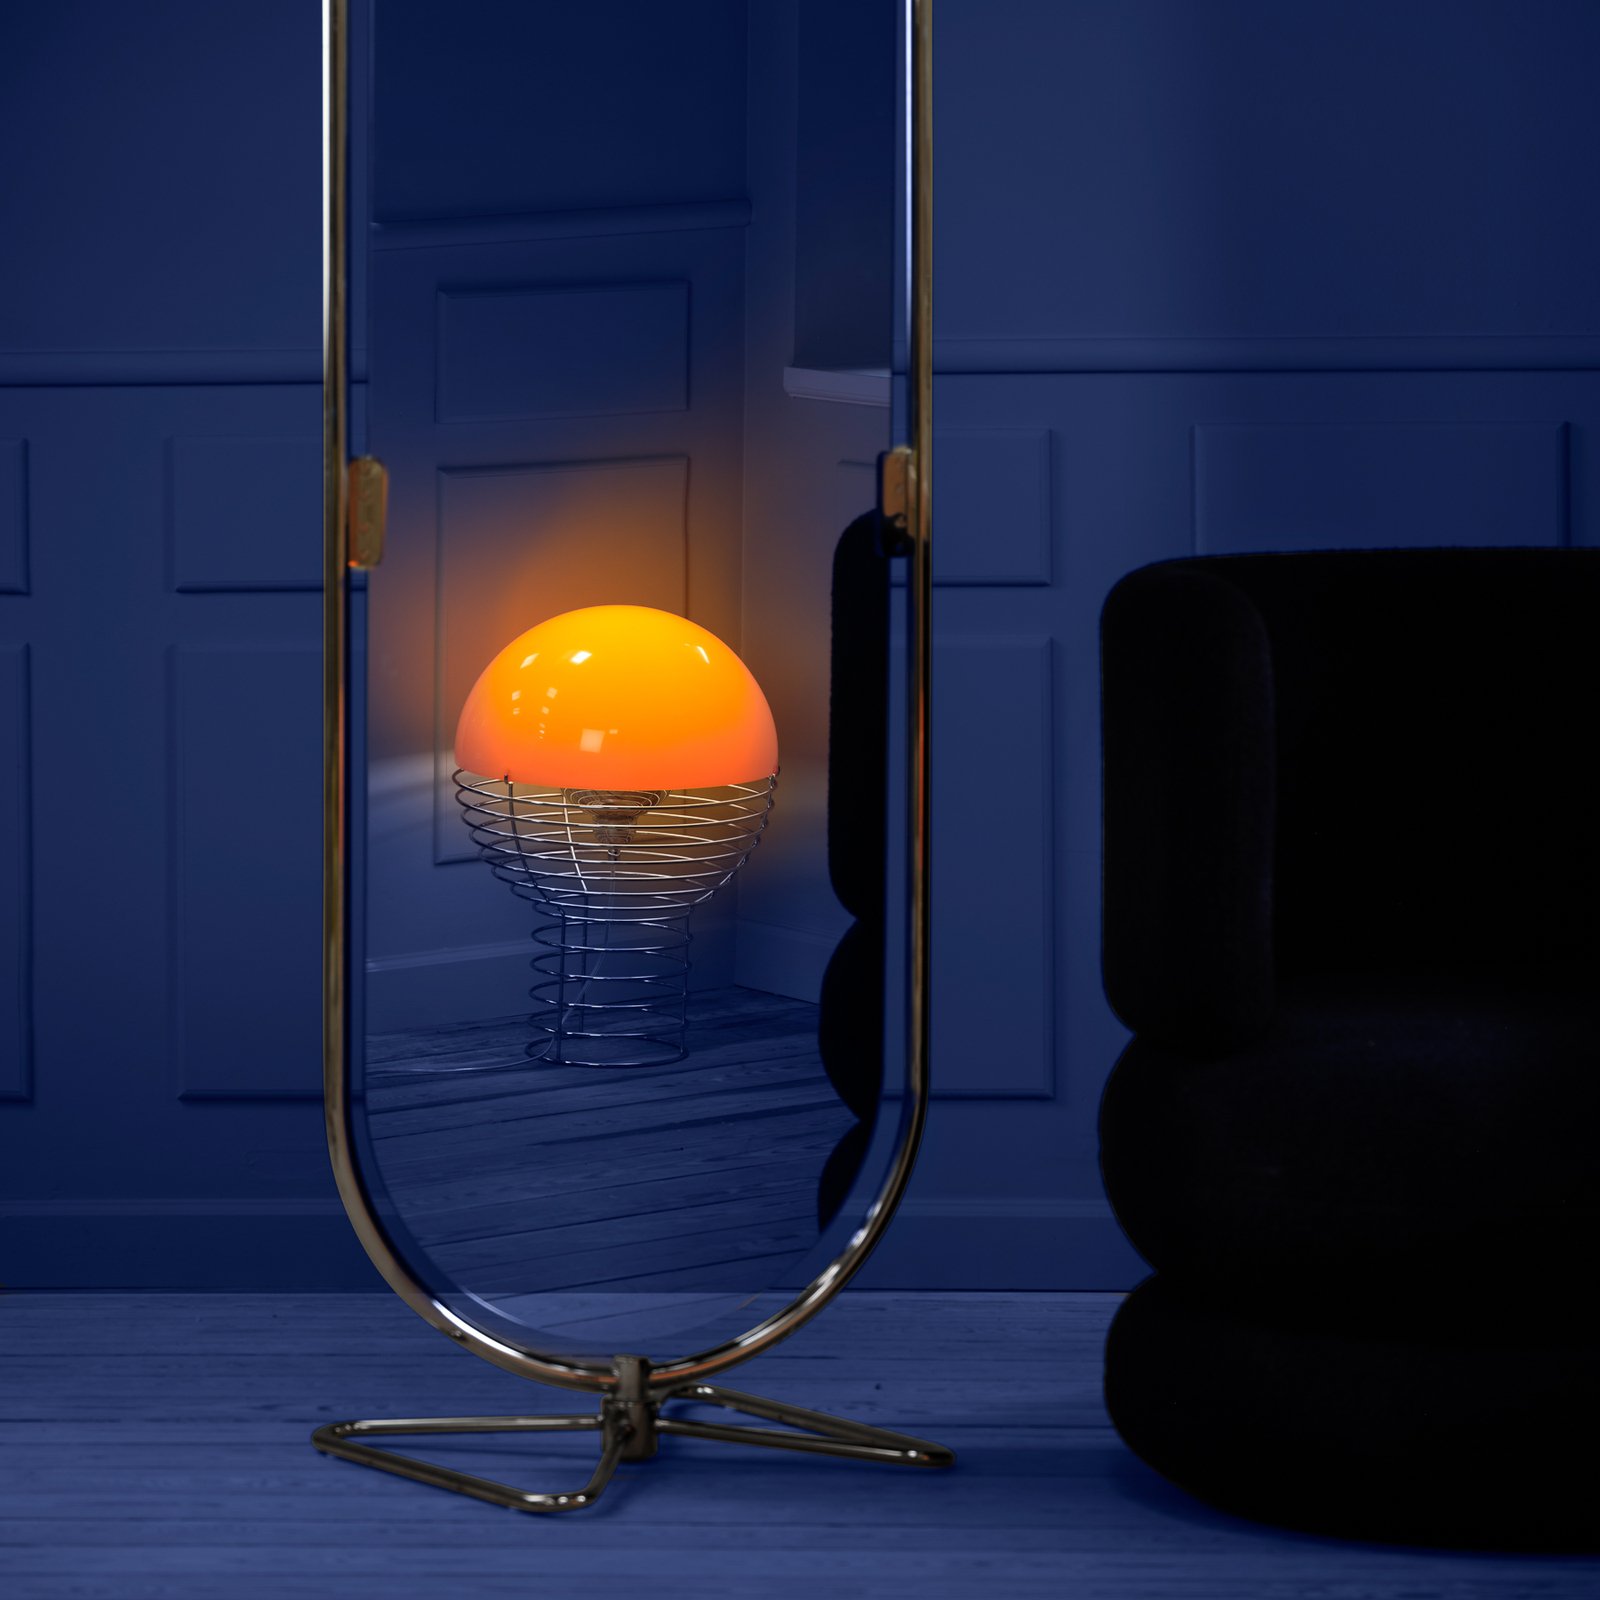 VERPAN Wire Stor bordslampa, orange